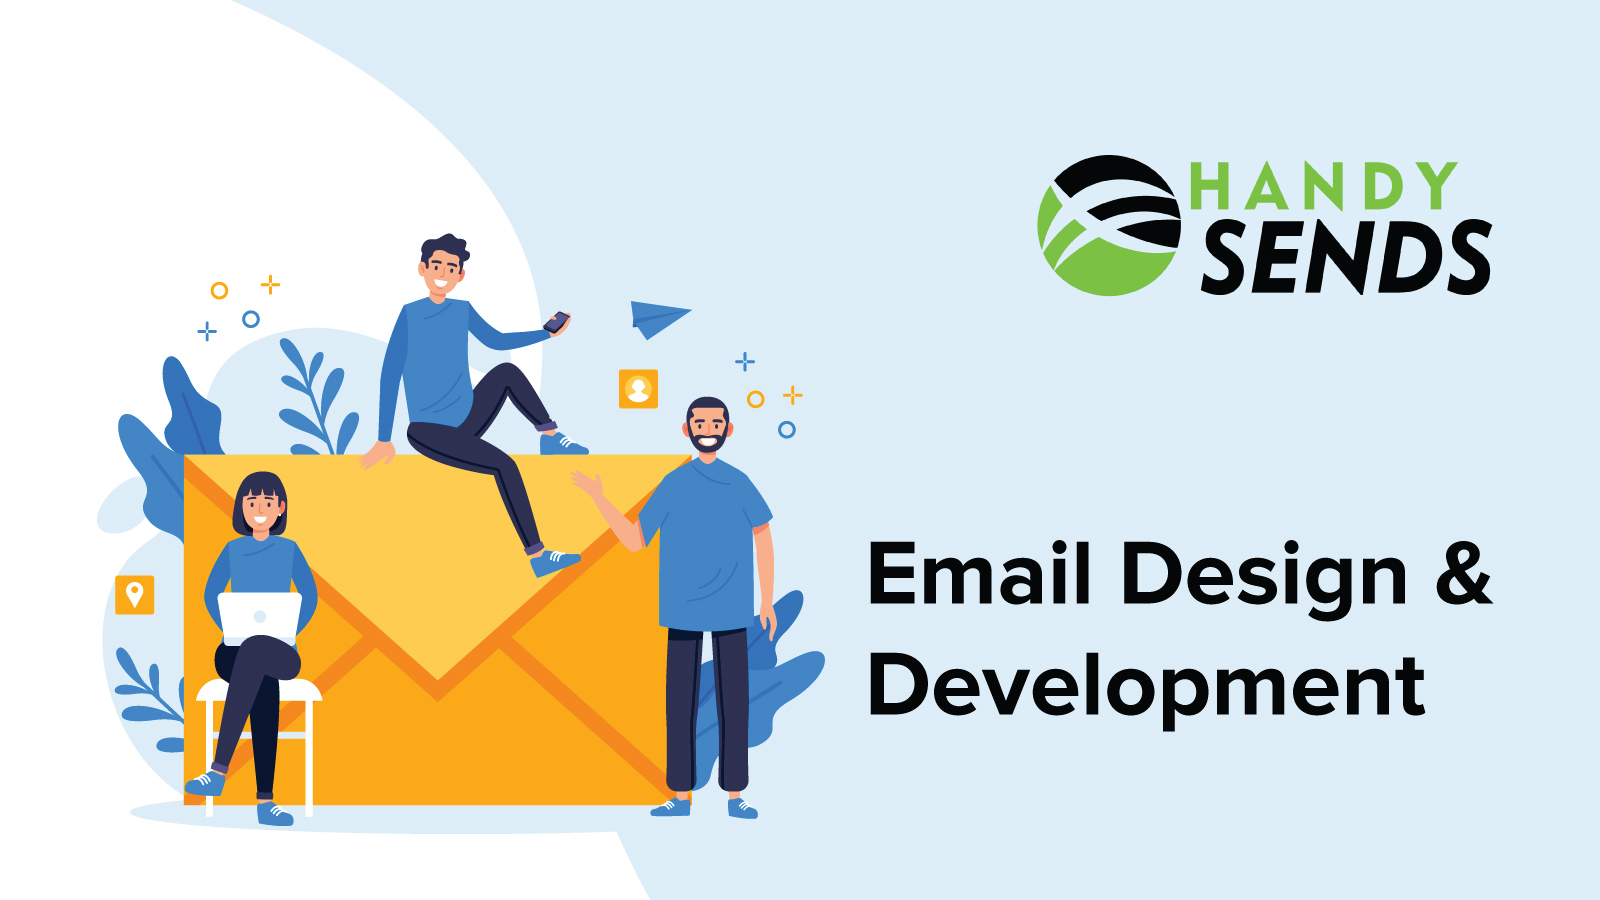 Email Design & Development